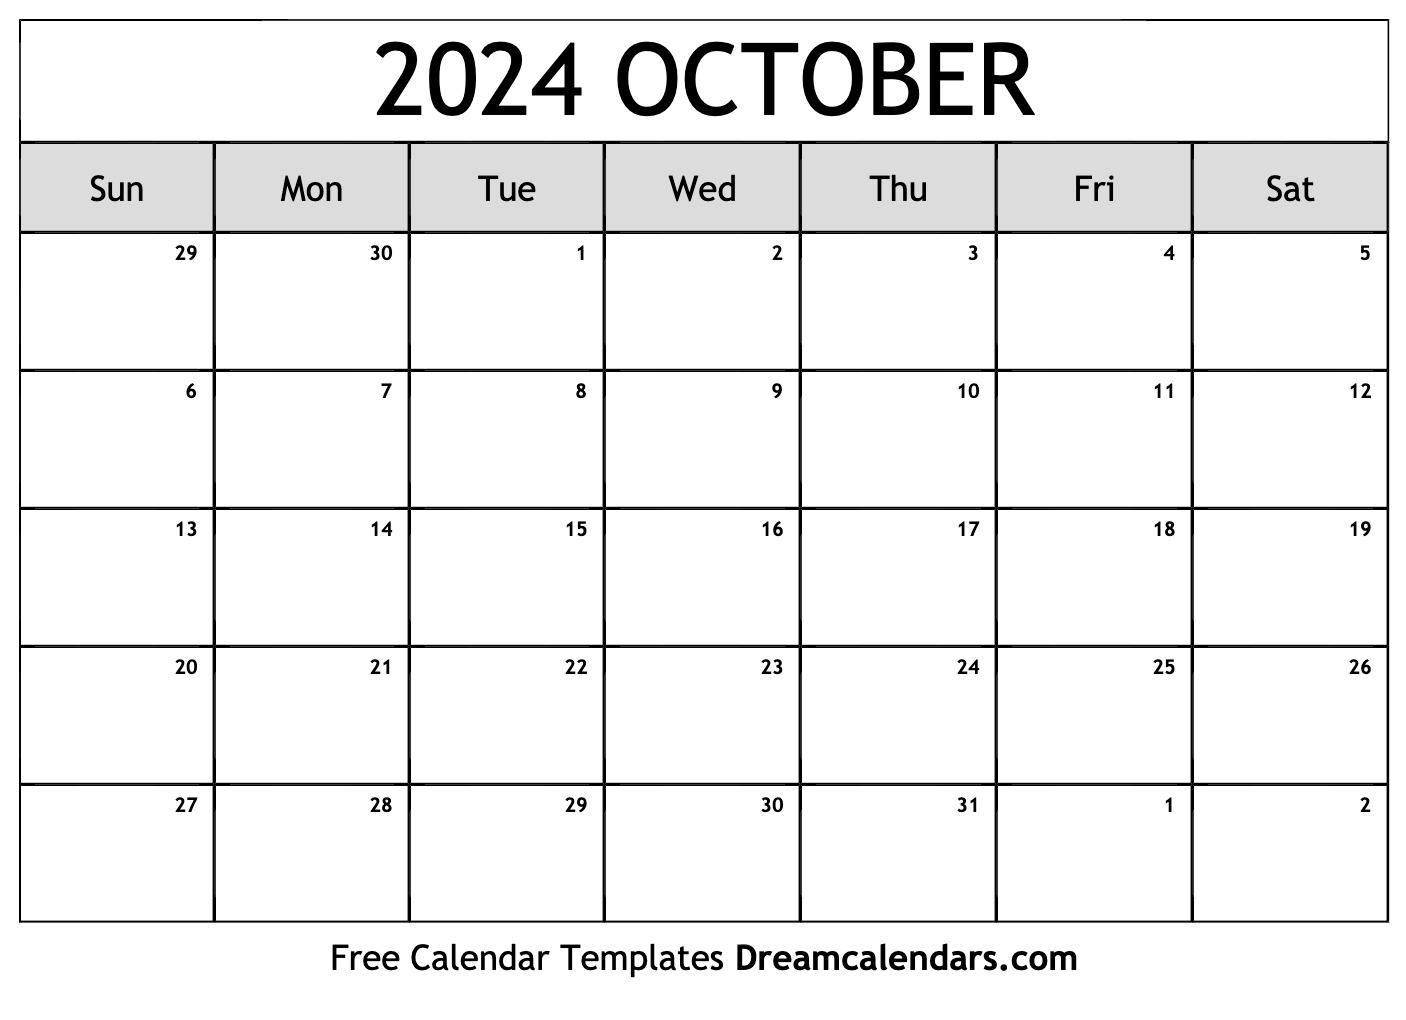 calendar-blank-october-2024-andra-blanche